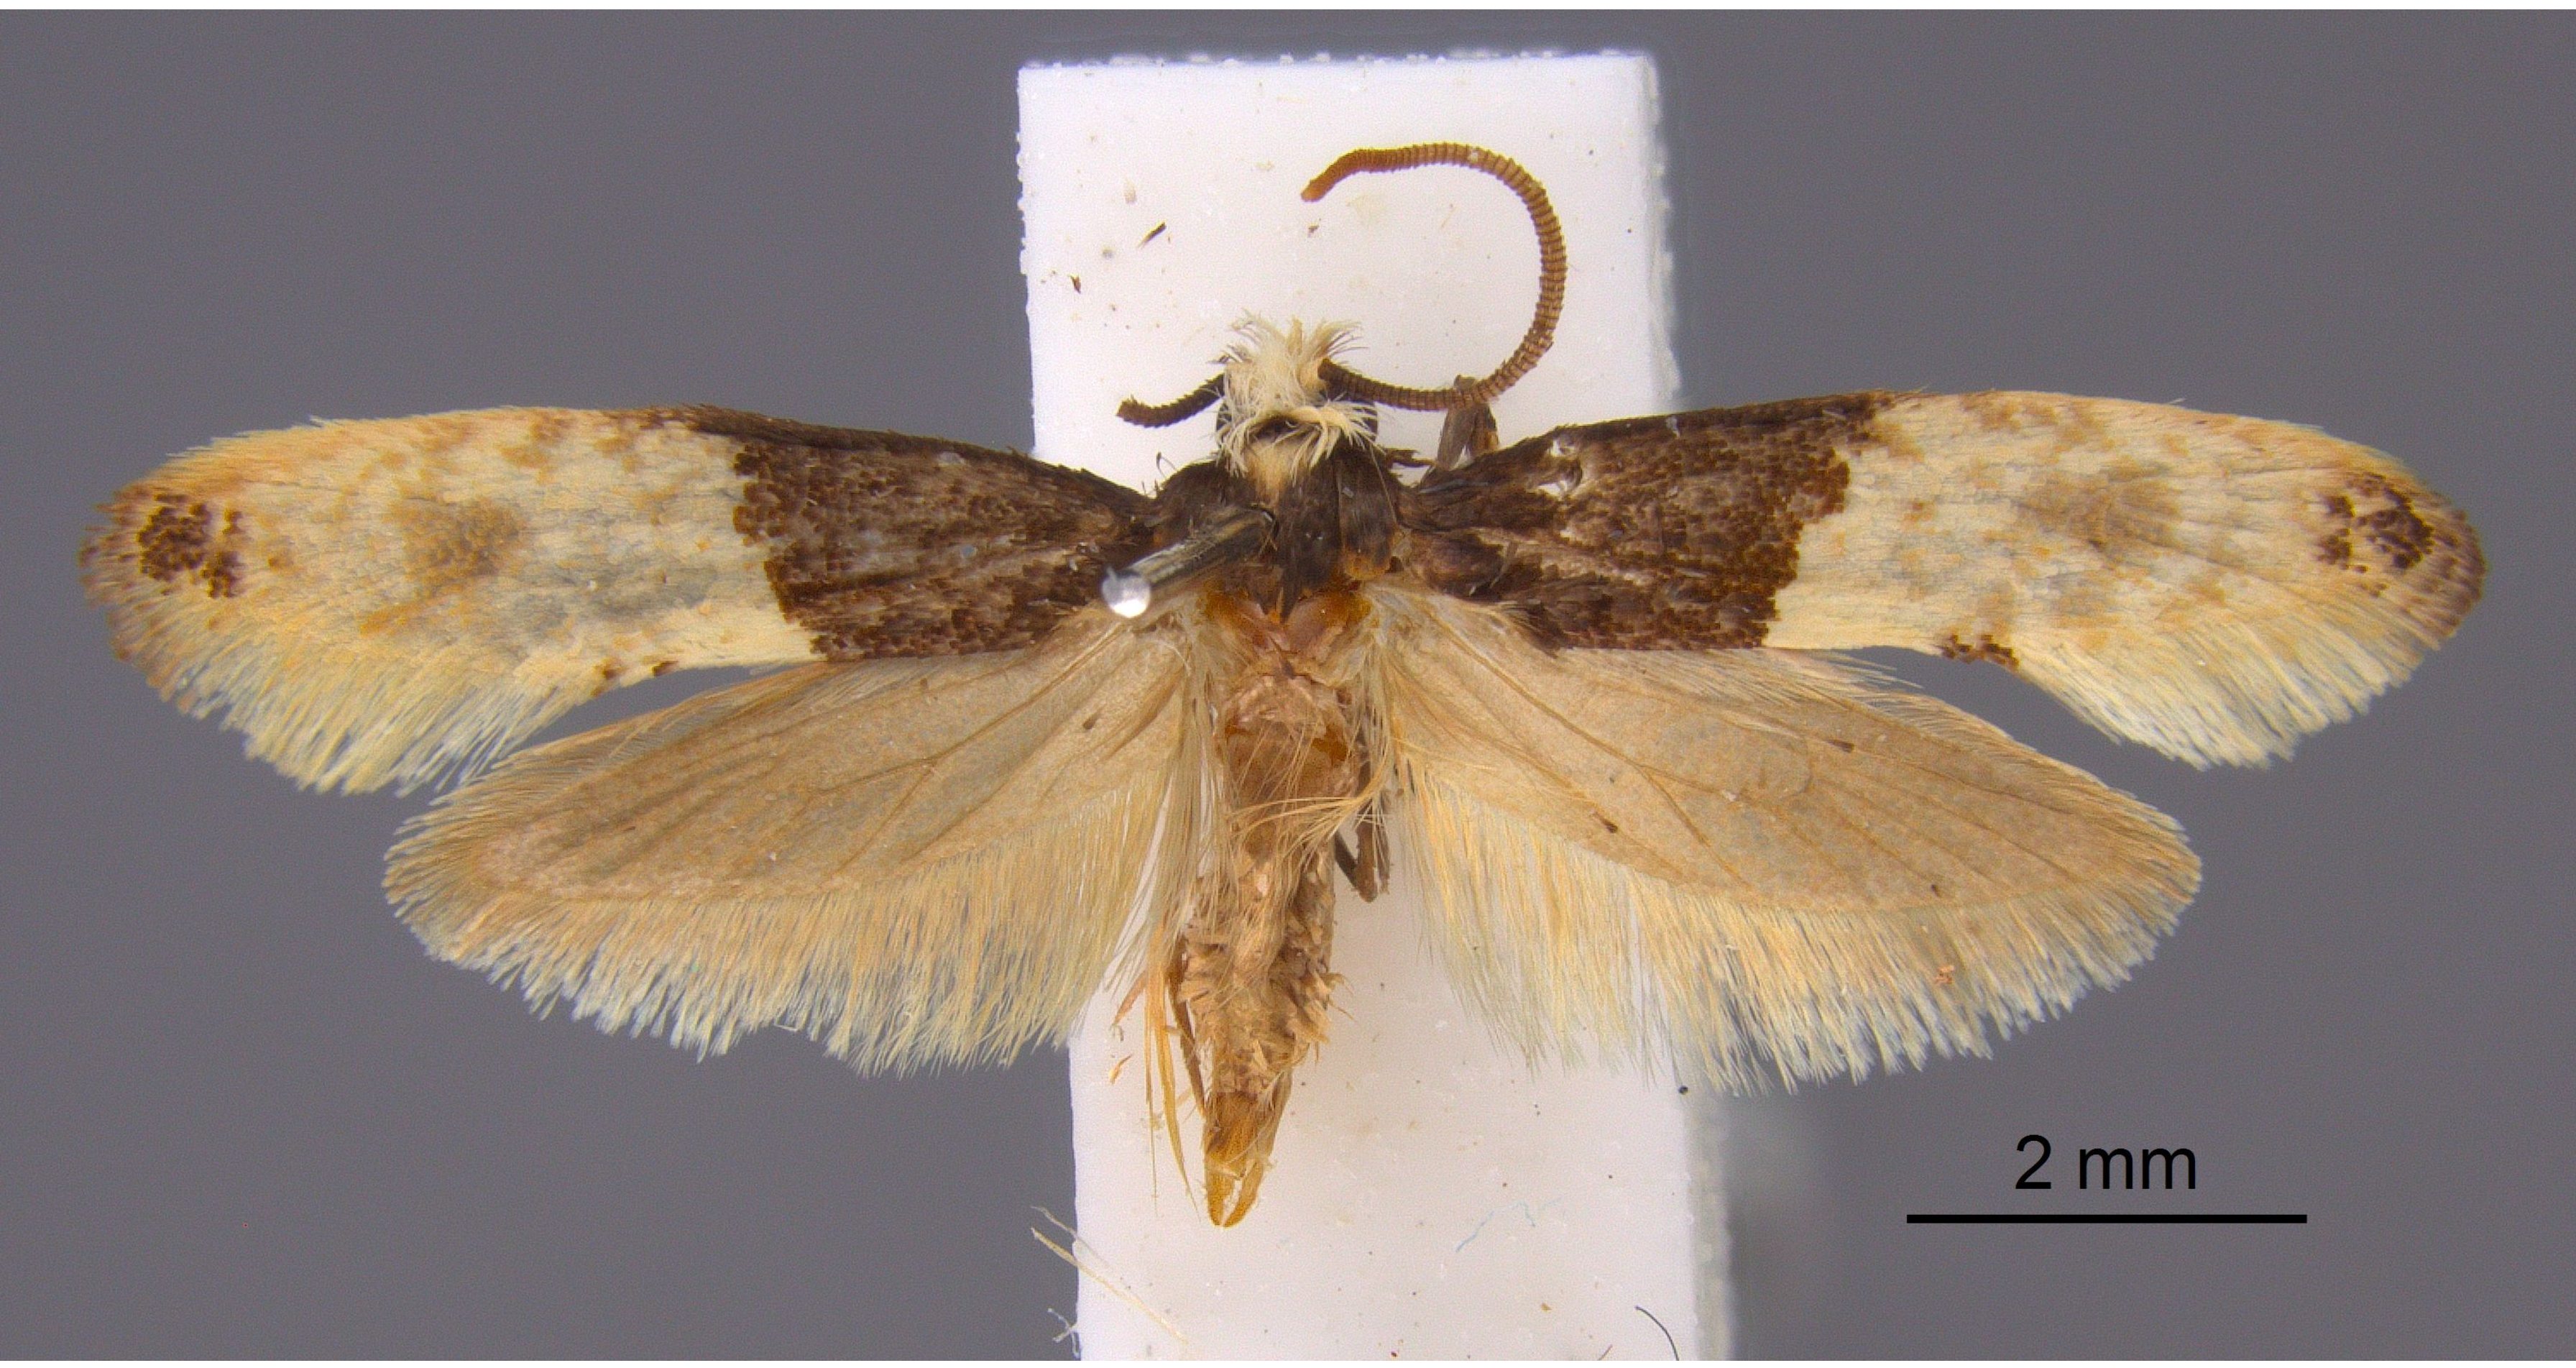 Identifying Clothes & Carpet Moths - Webbing Clothes Moth / Case-Beari